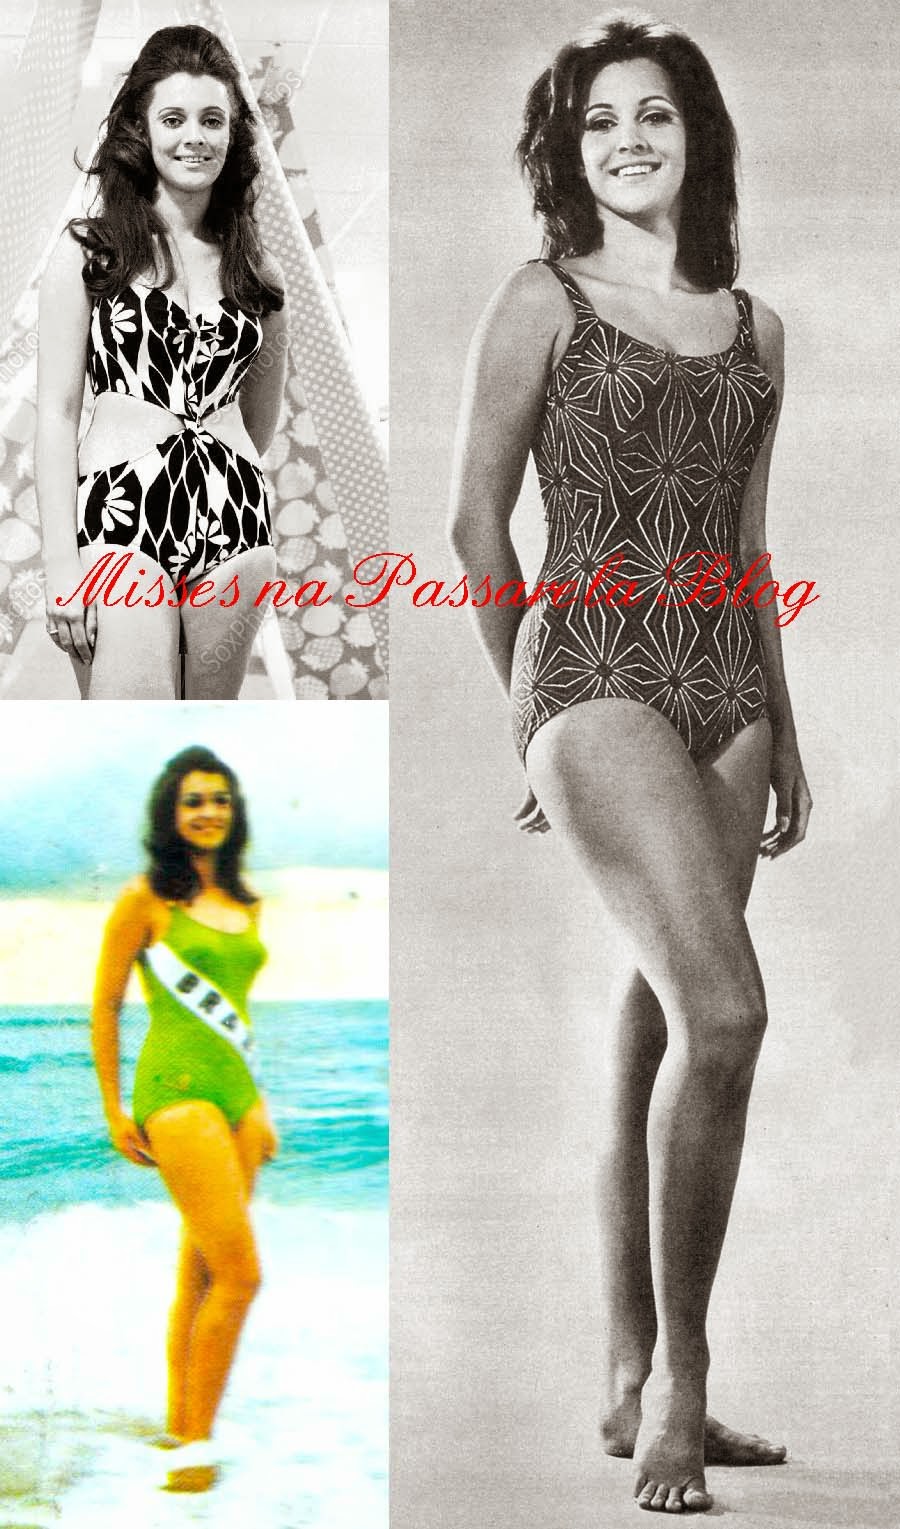 ☽ ✮ ✯ ✰ ☆ ☁ Galeria de Martha Vasconcelos, Miss Universe 1968.☽ ✮ ✯ ✰ ☆ ☁ Livro%2Bde%2BMartha%2BVasconcellos%2B1